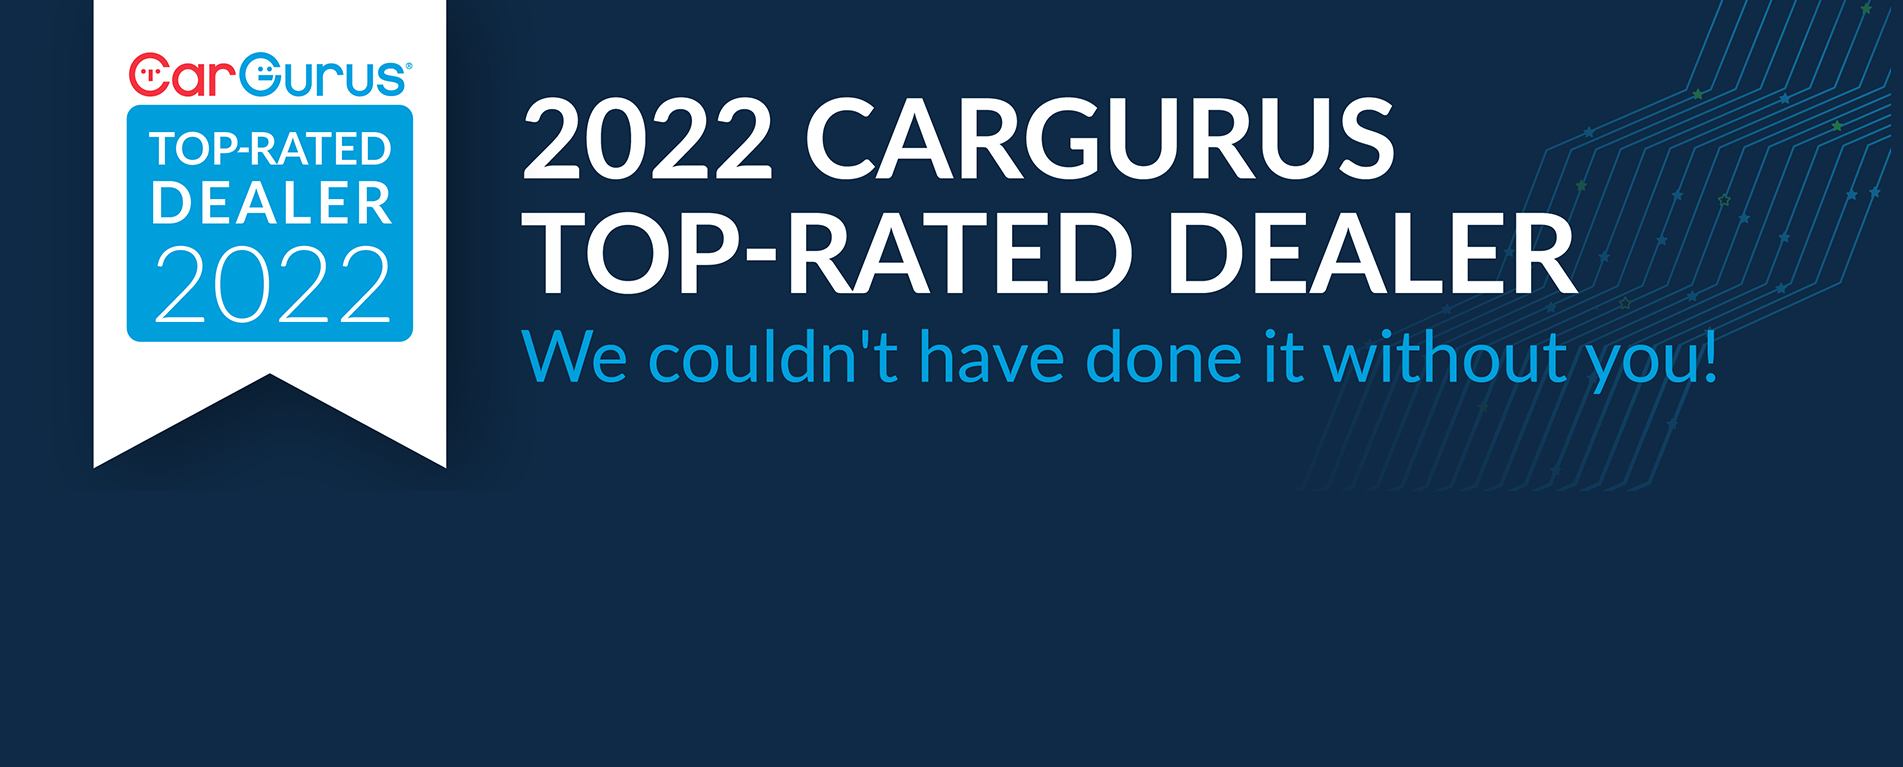 2022 Cargurus Top-Rated Dealer